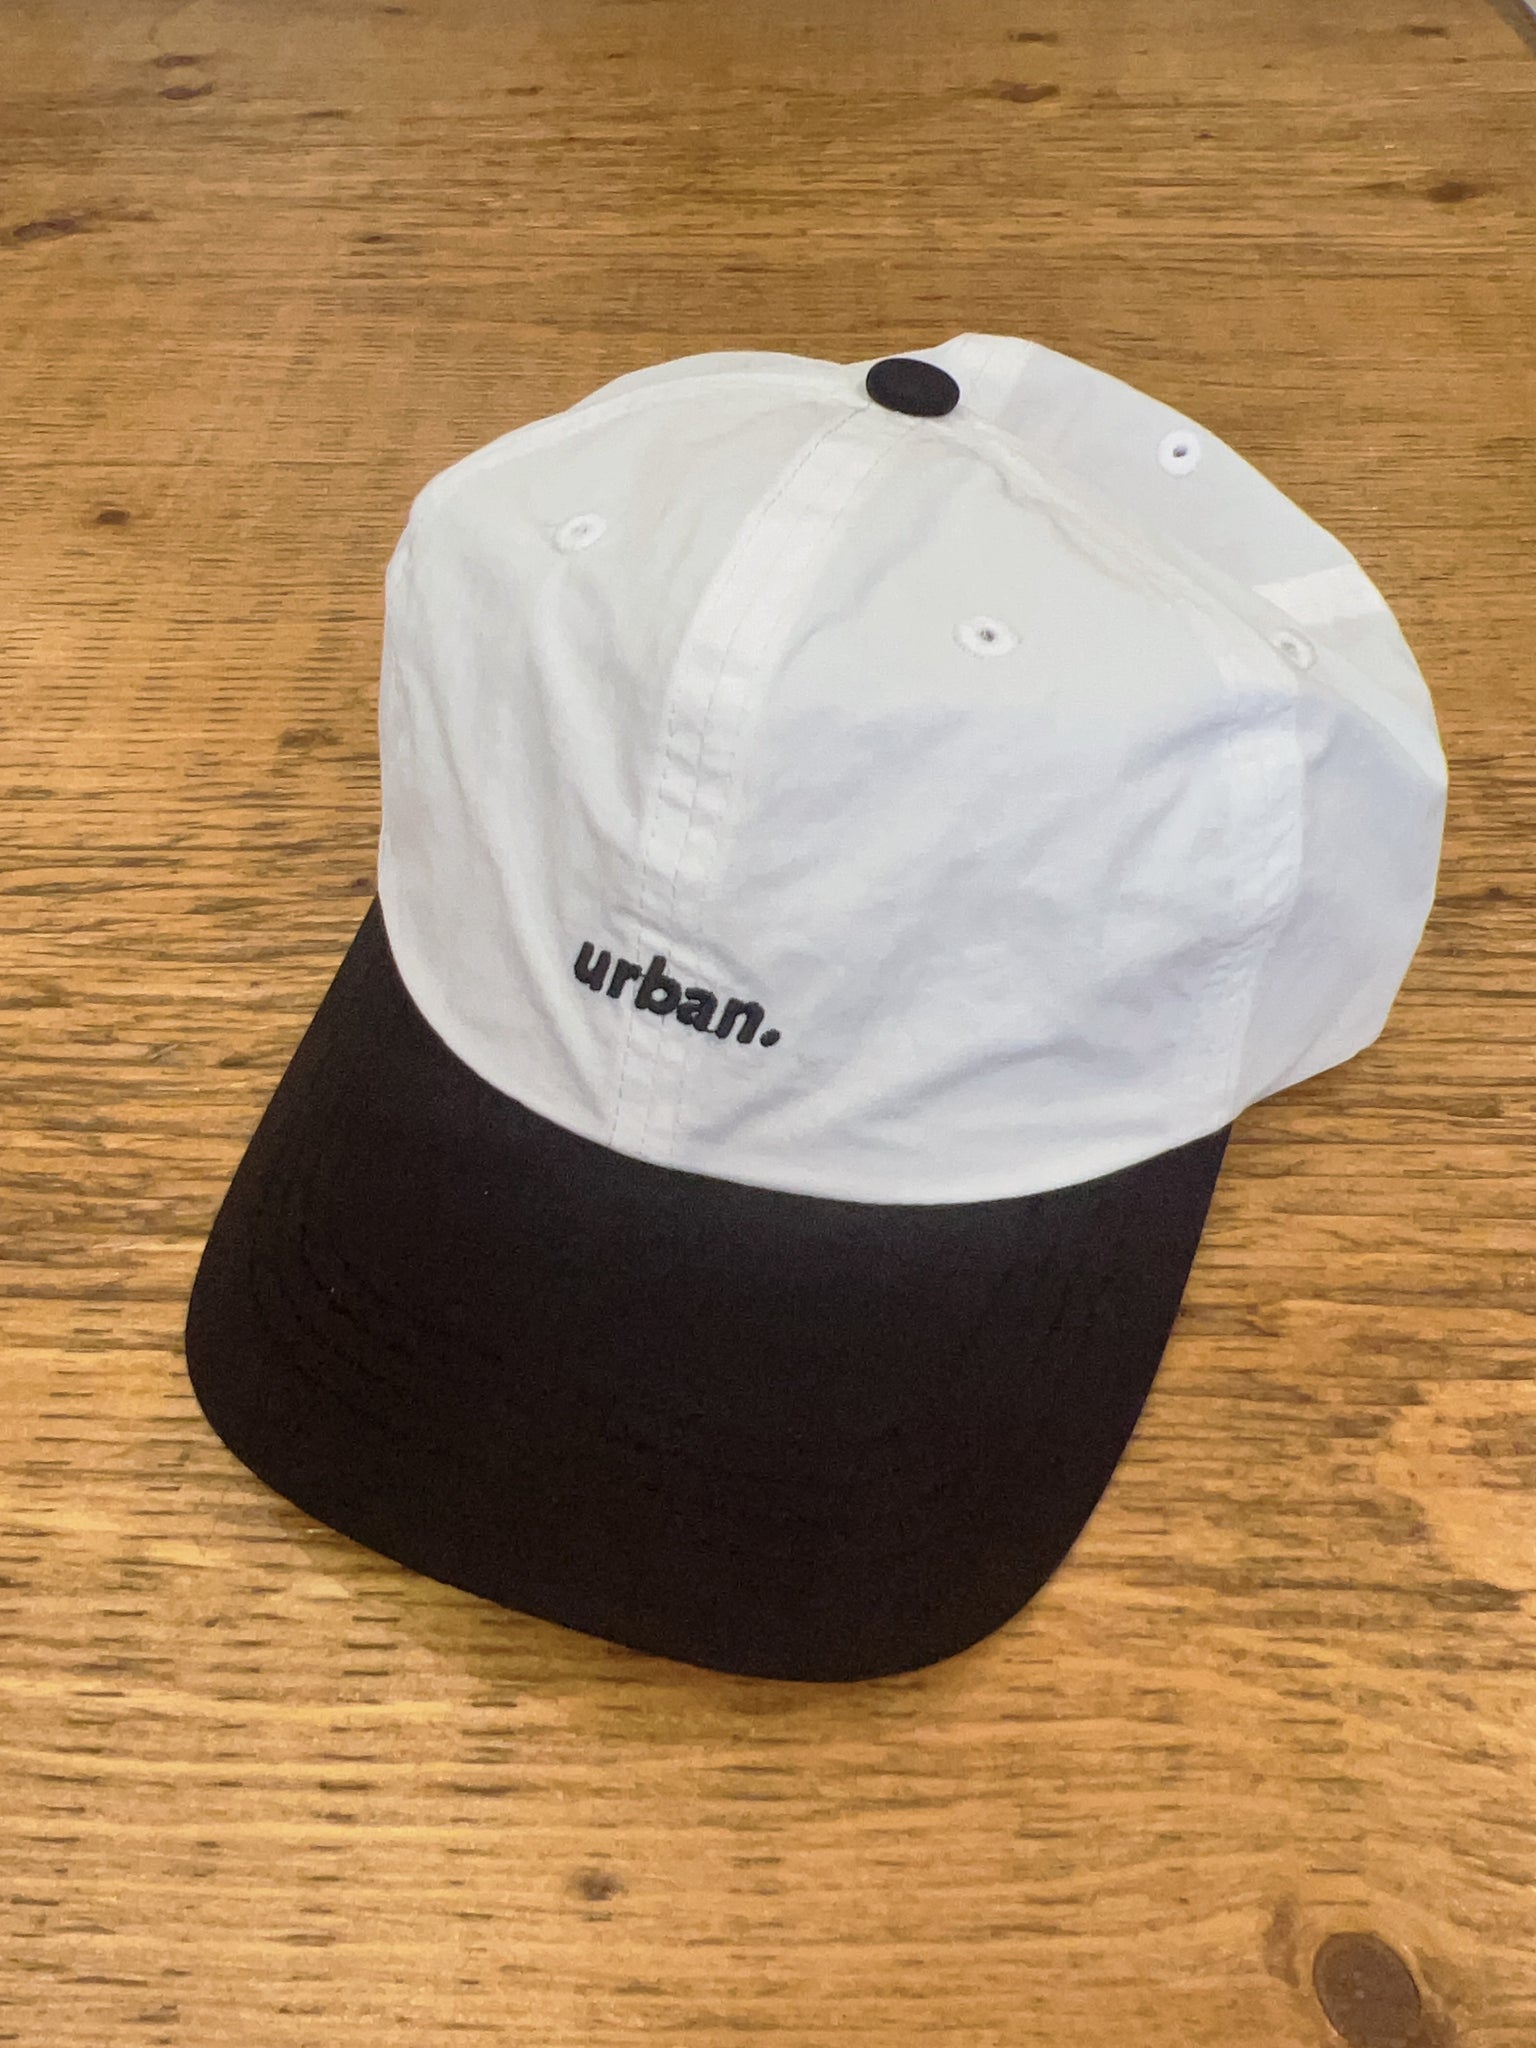 URBAN Two-tone ball cap